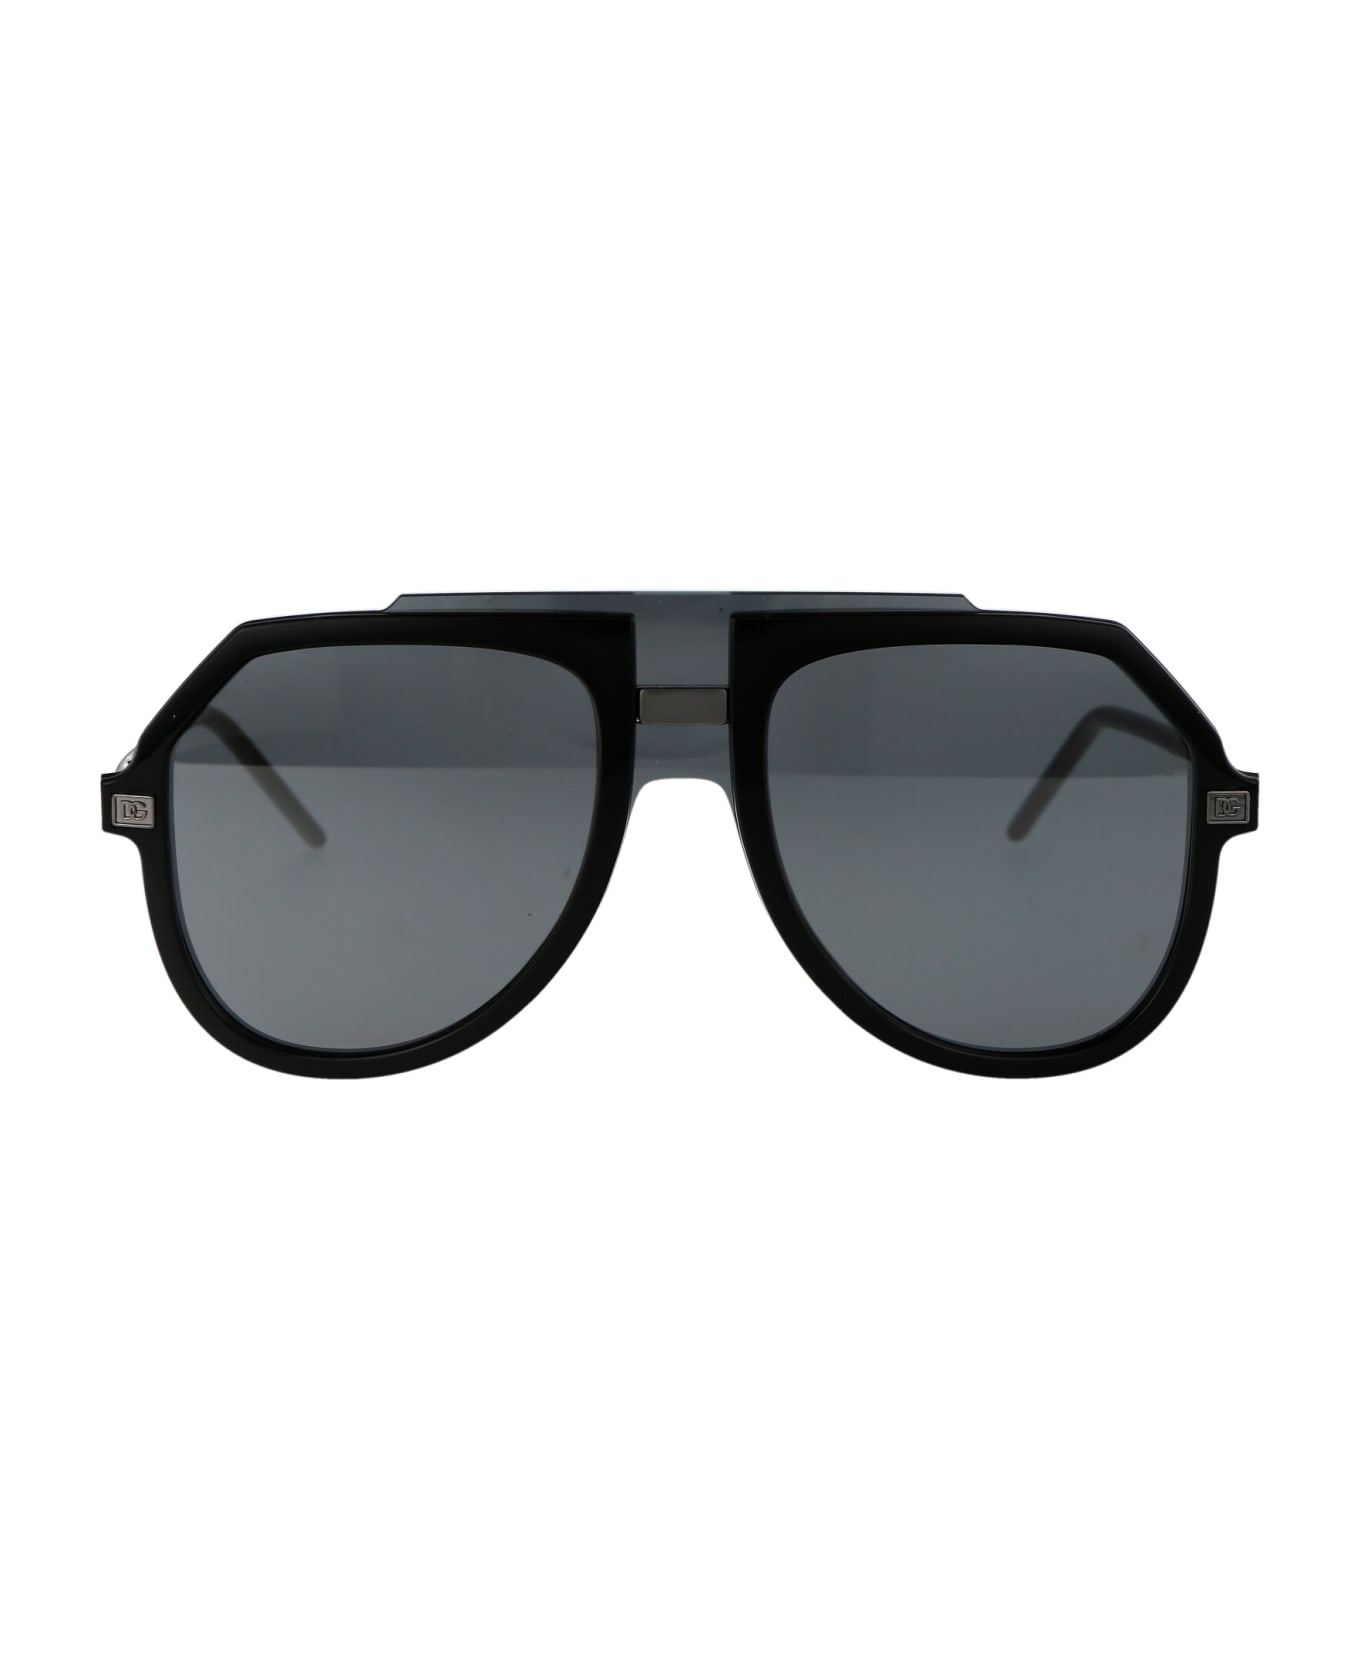 Dolce & Gabbana Eyewear 0dg6195 Sunglasses - 501/6G BLACK